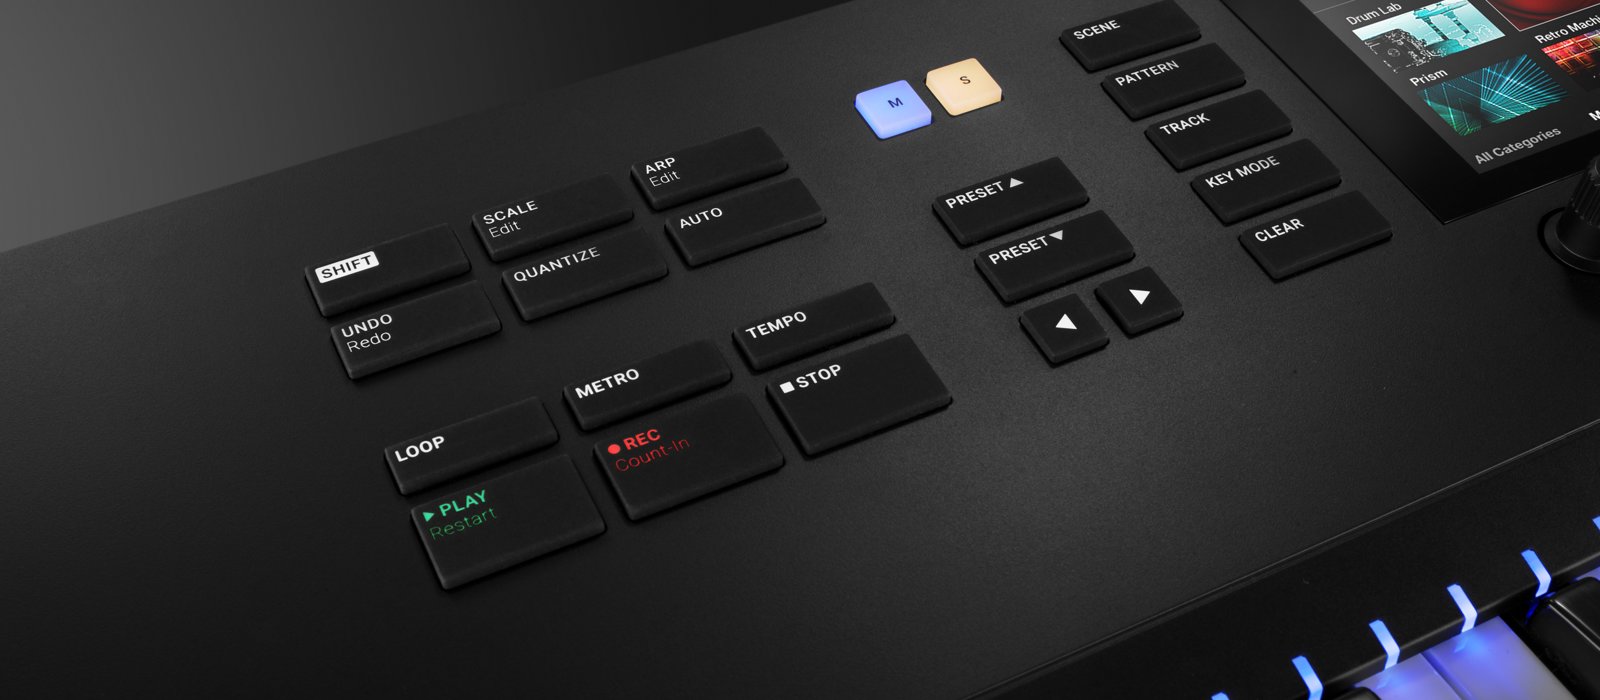 Native Instruments Komplete Kontrol S61 MK2 Keyboard Controller - Keyboard Controller - Professional Audio Design, Inc